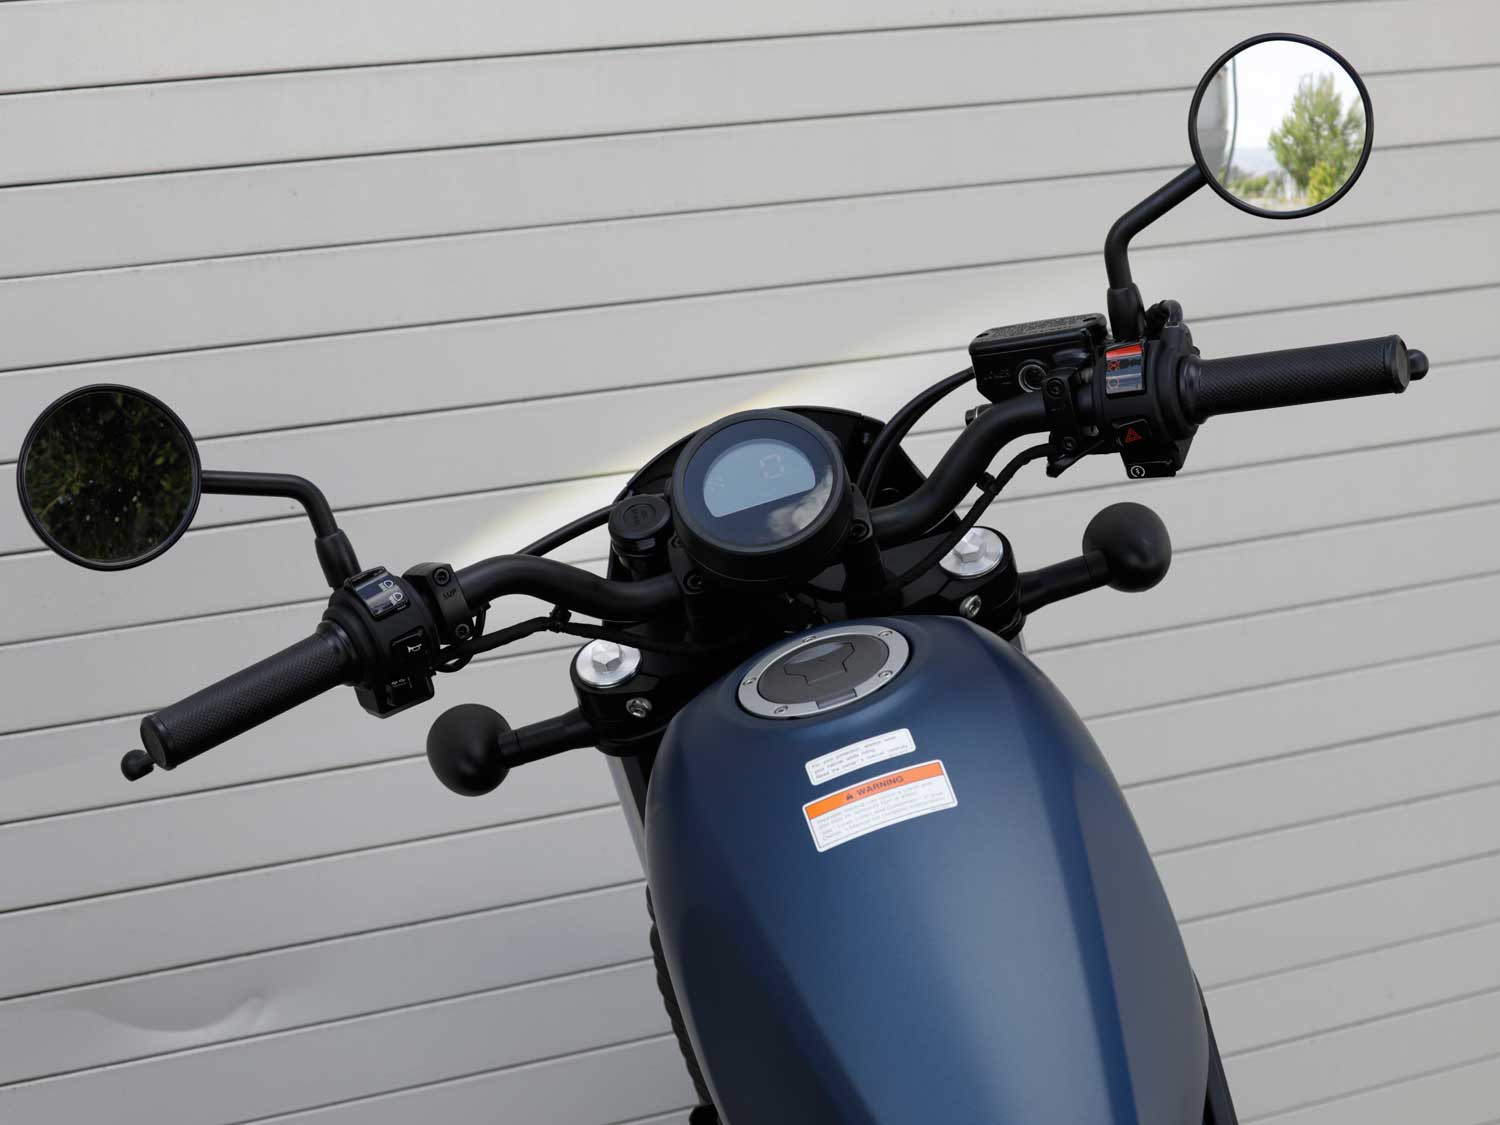 2020 Honda Rebel 500 ABS MC Commute Review | Motorcyclist